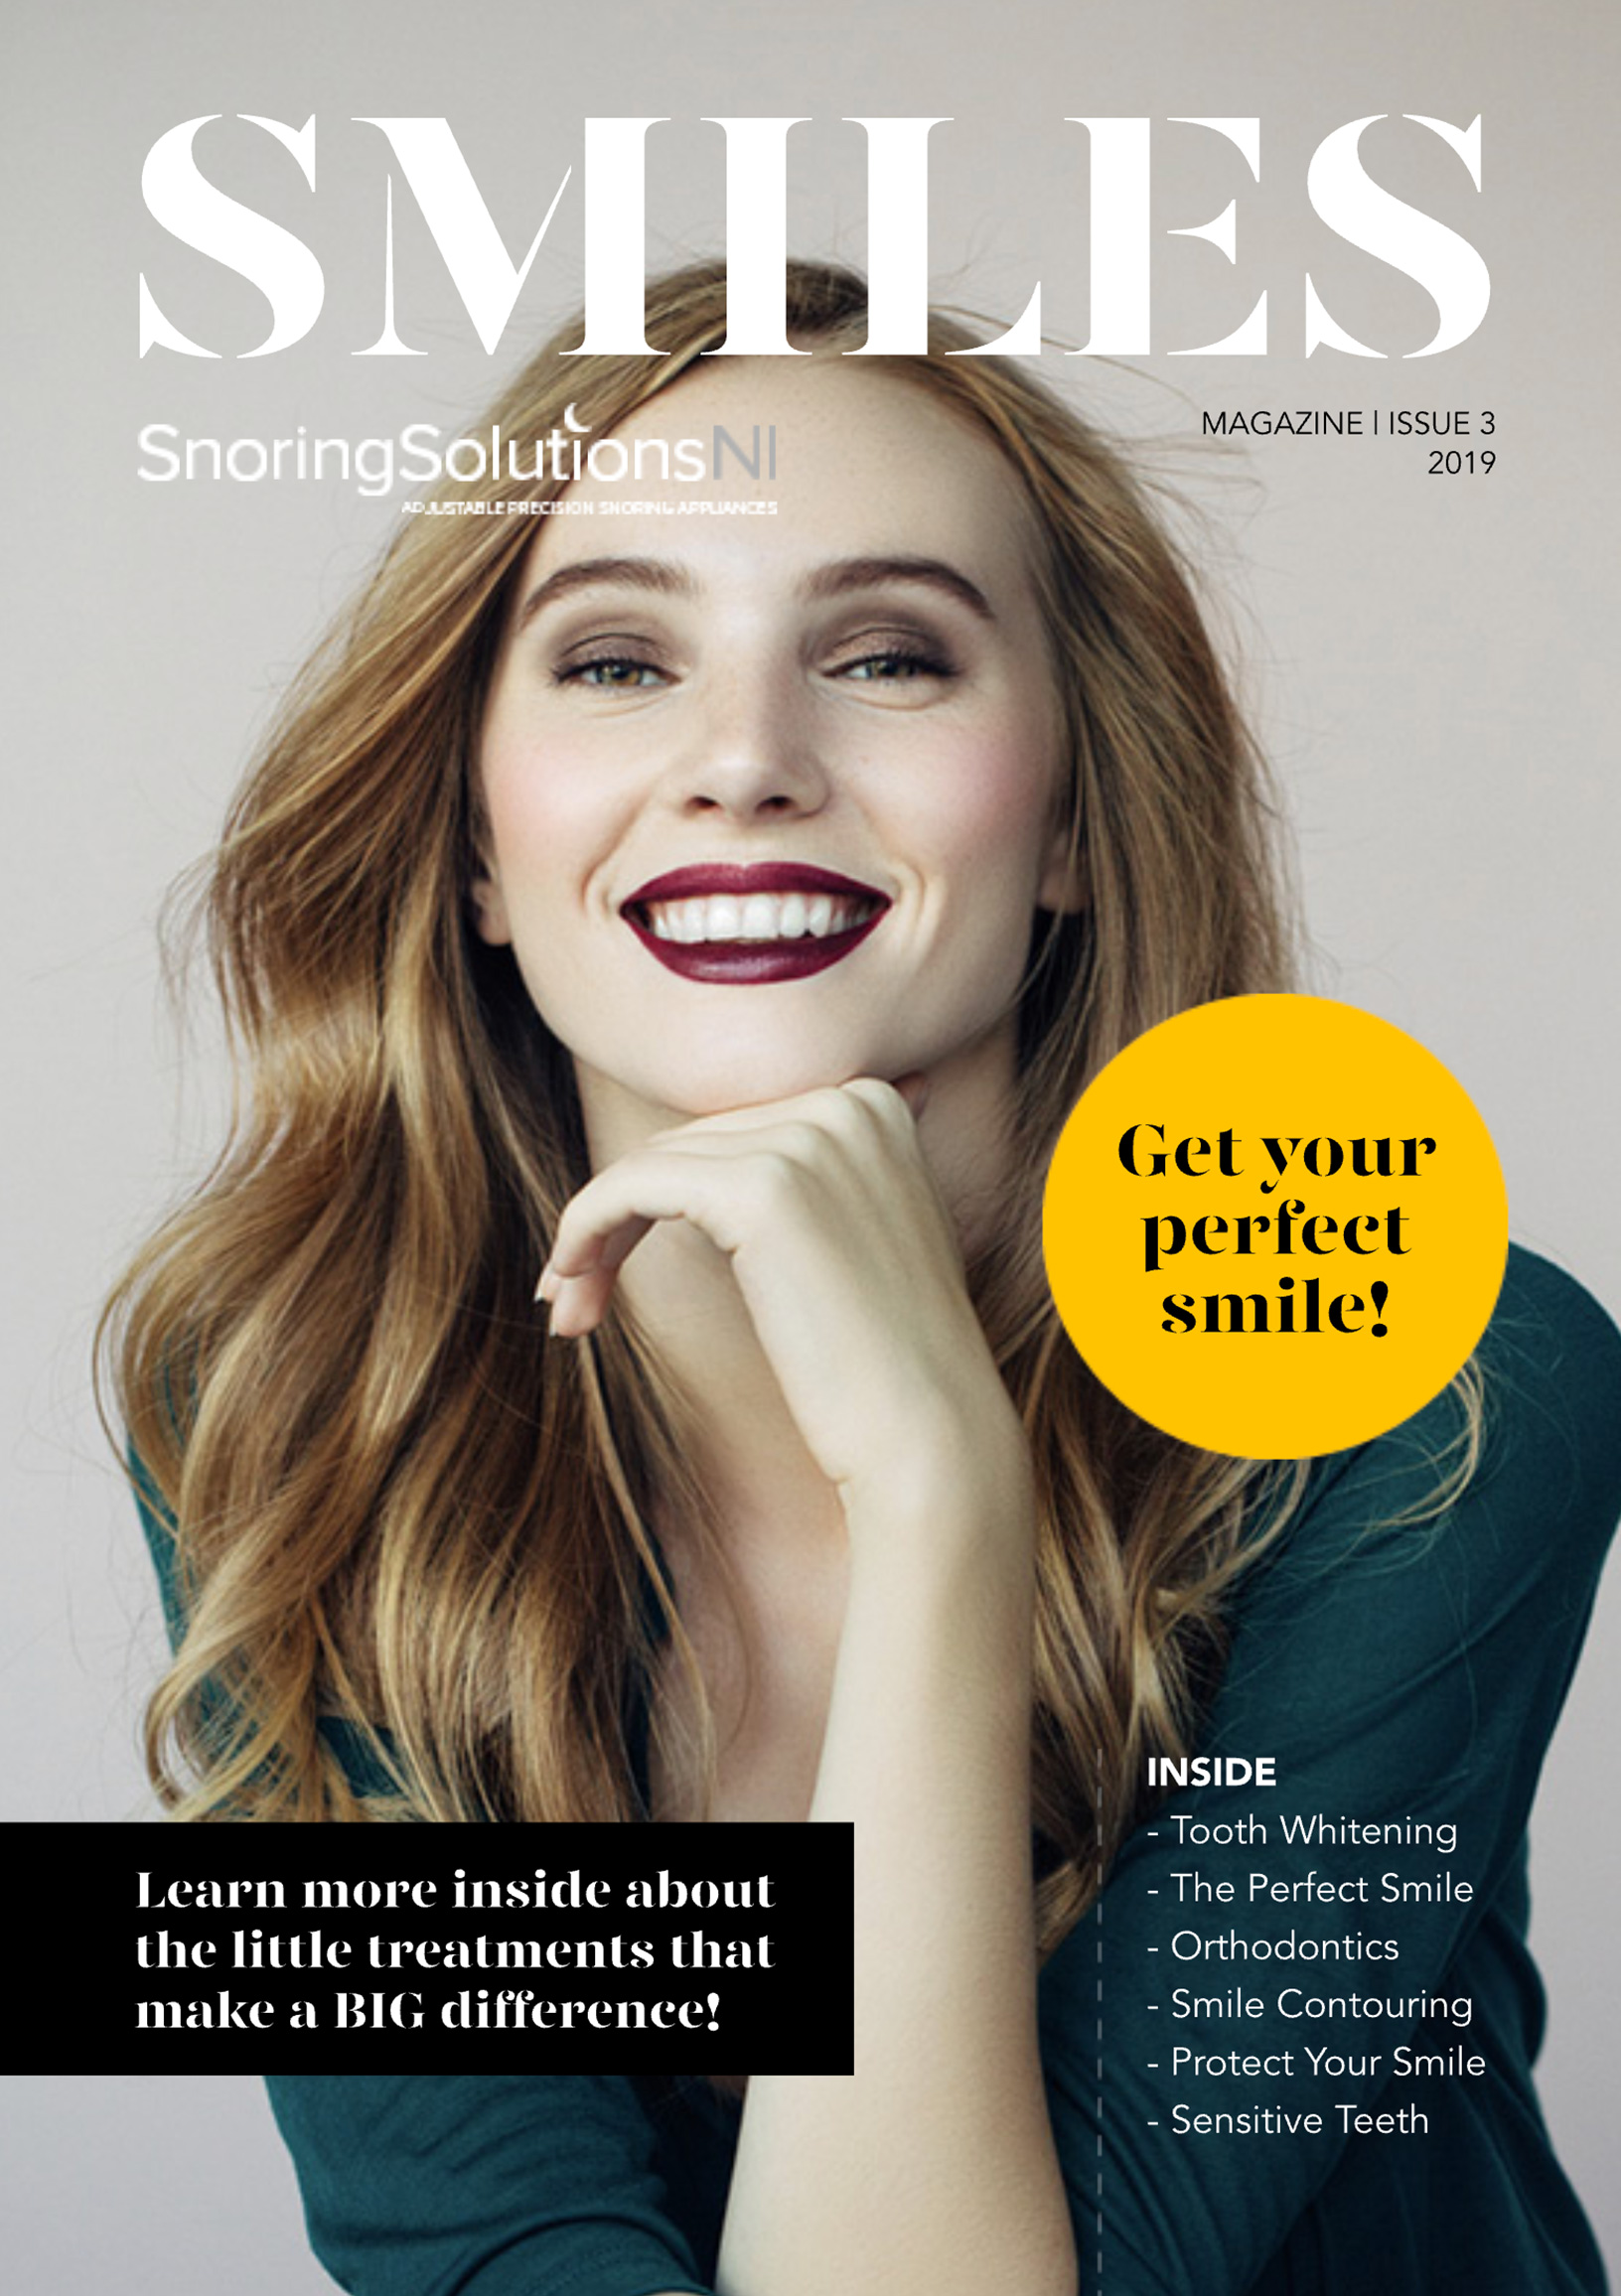 Smile Dental Magazine